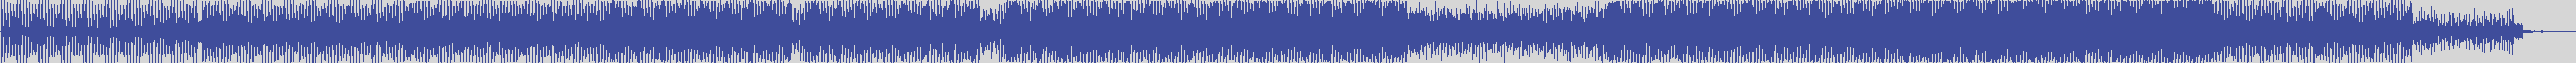 vitti_records [VIT012] 303shape - Canis [Original Mix] audio wave form